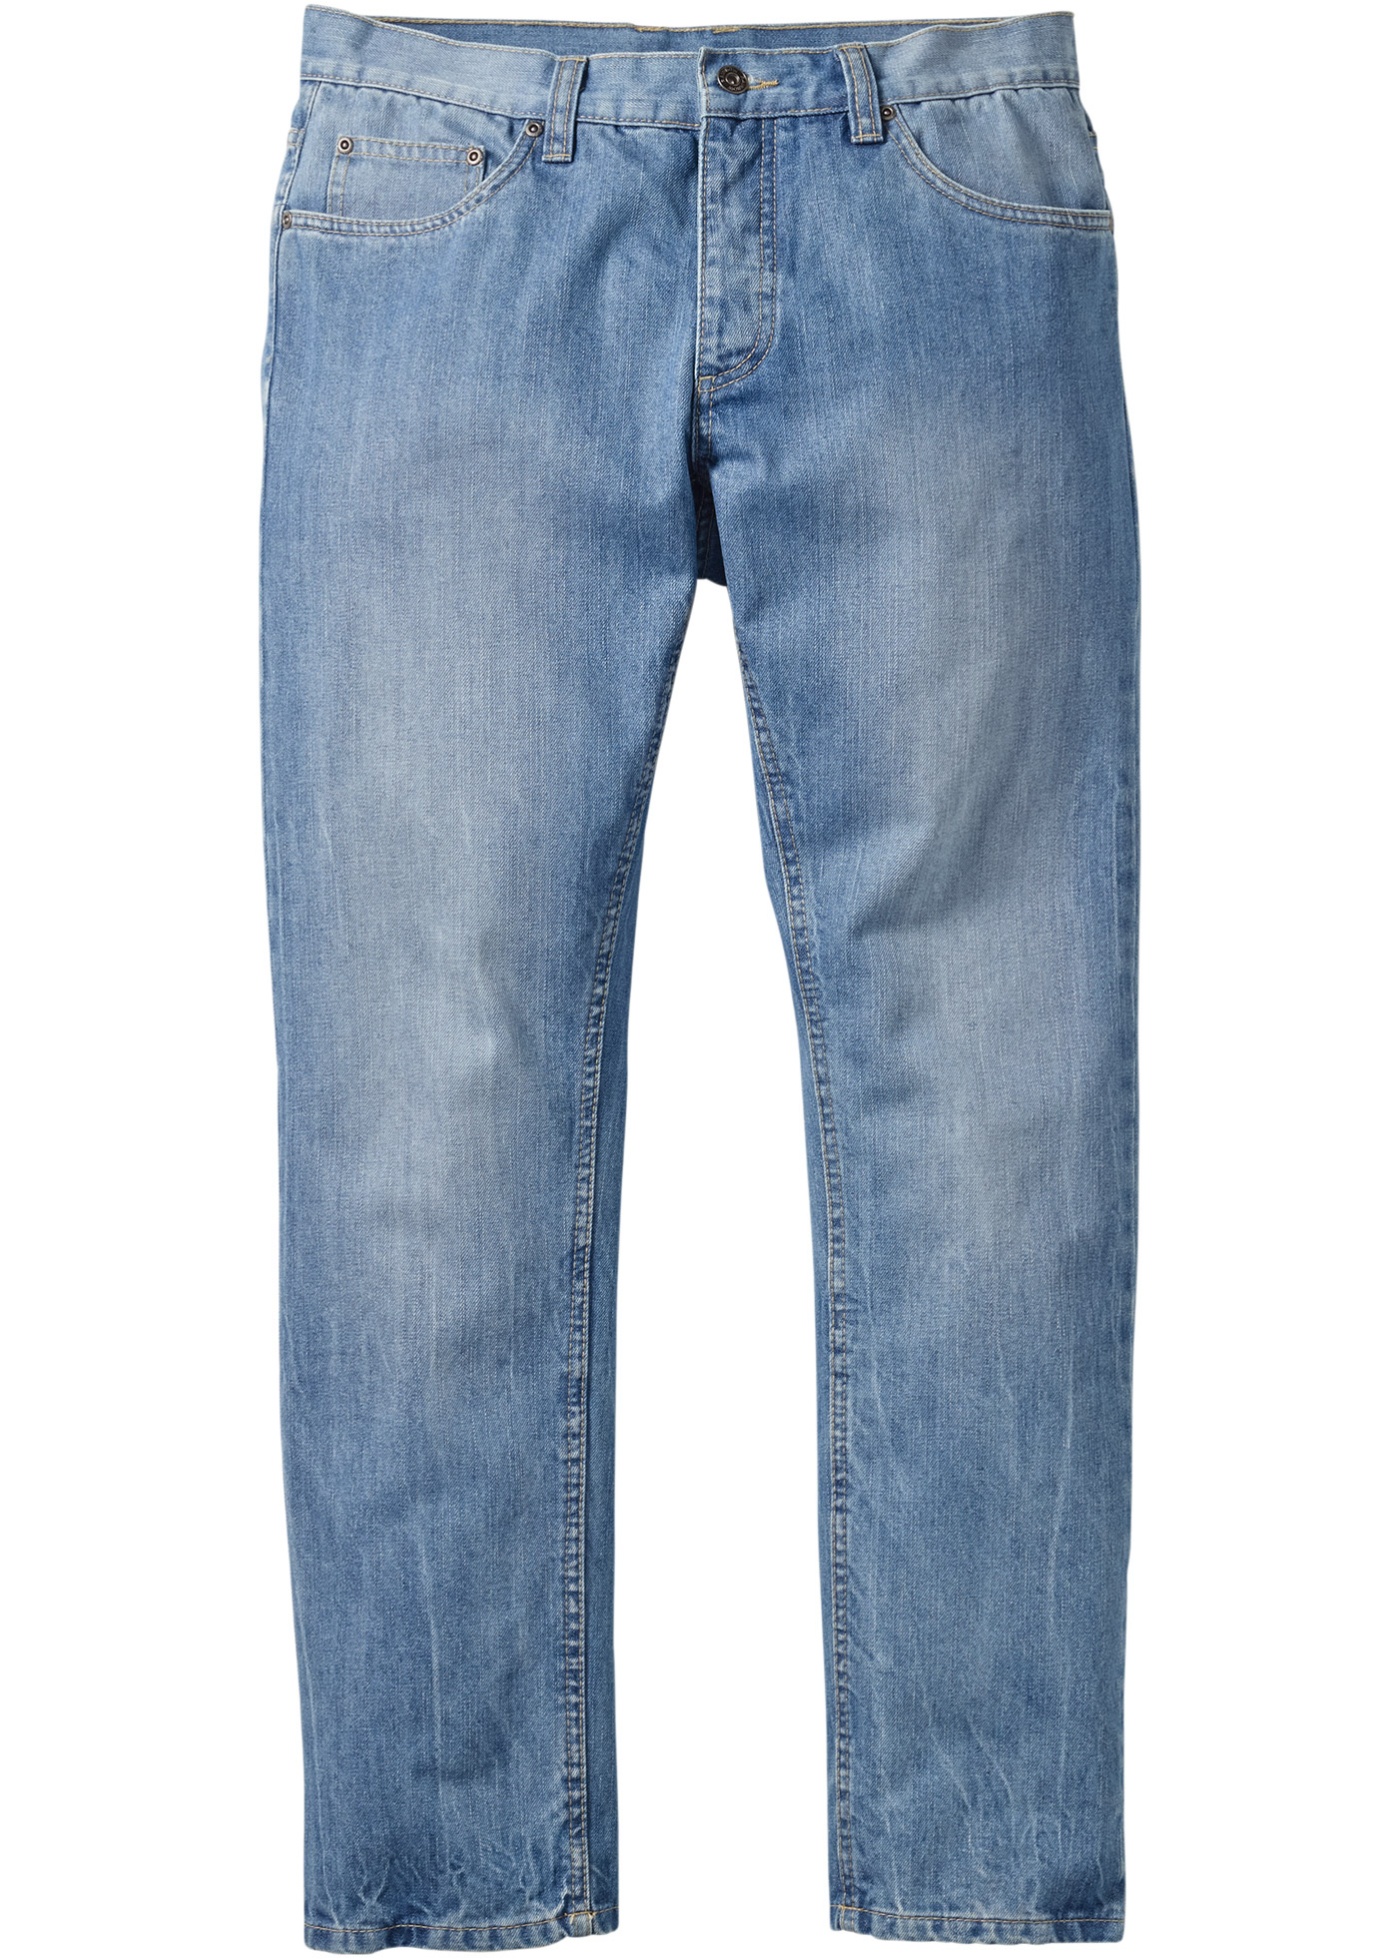 Jeans slim fit straight, längd 32